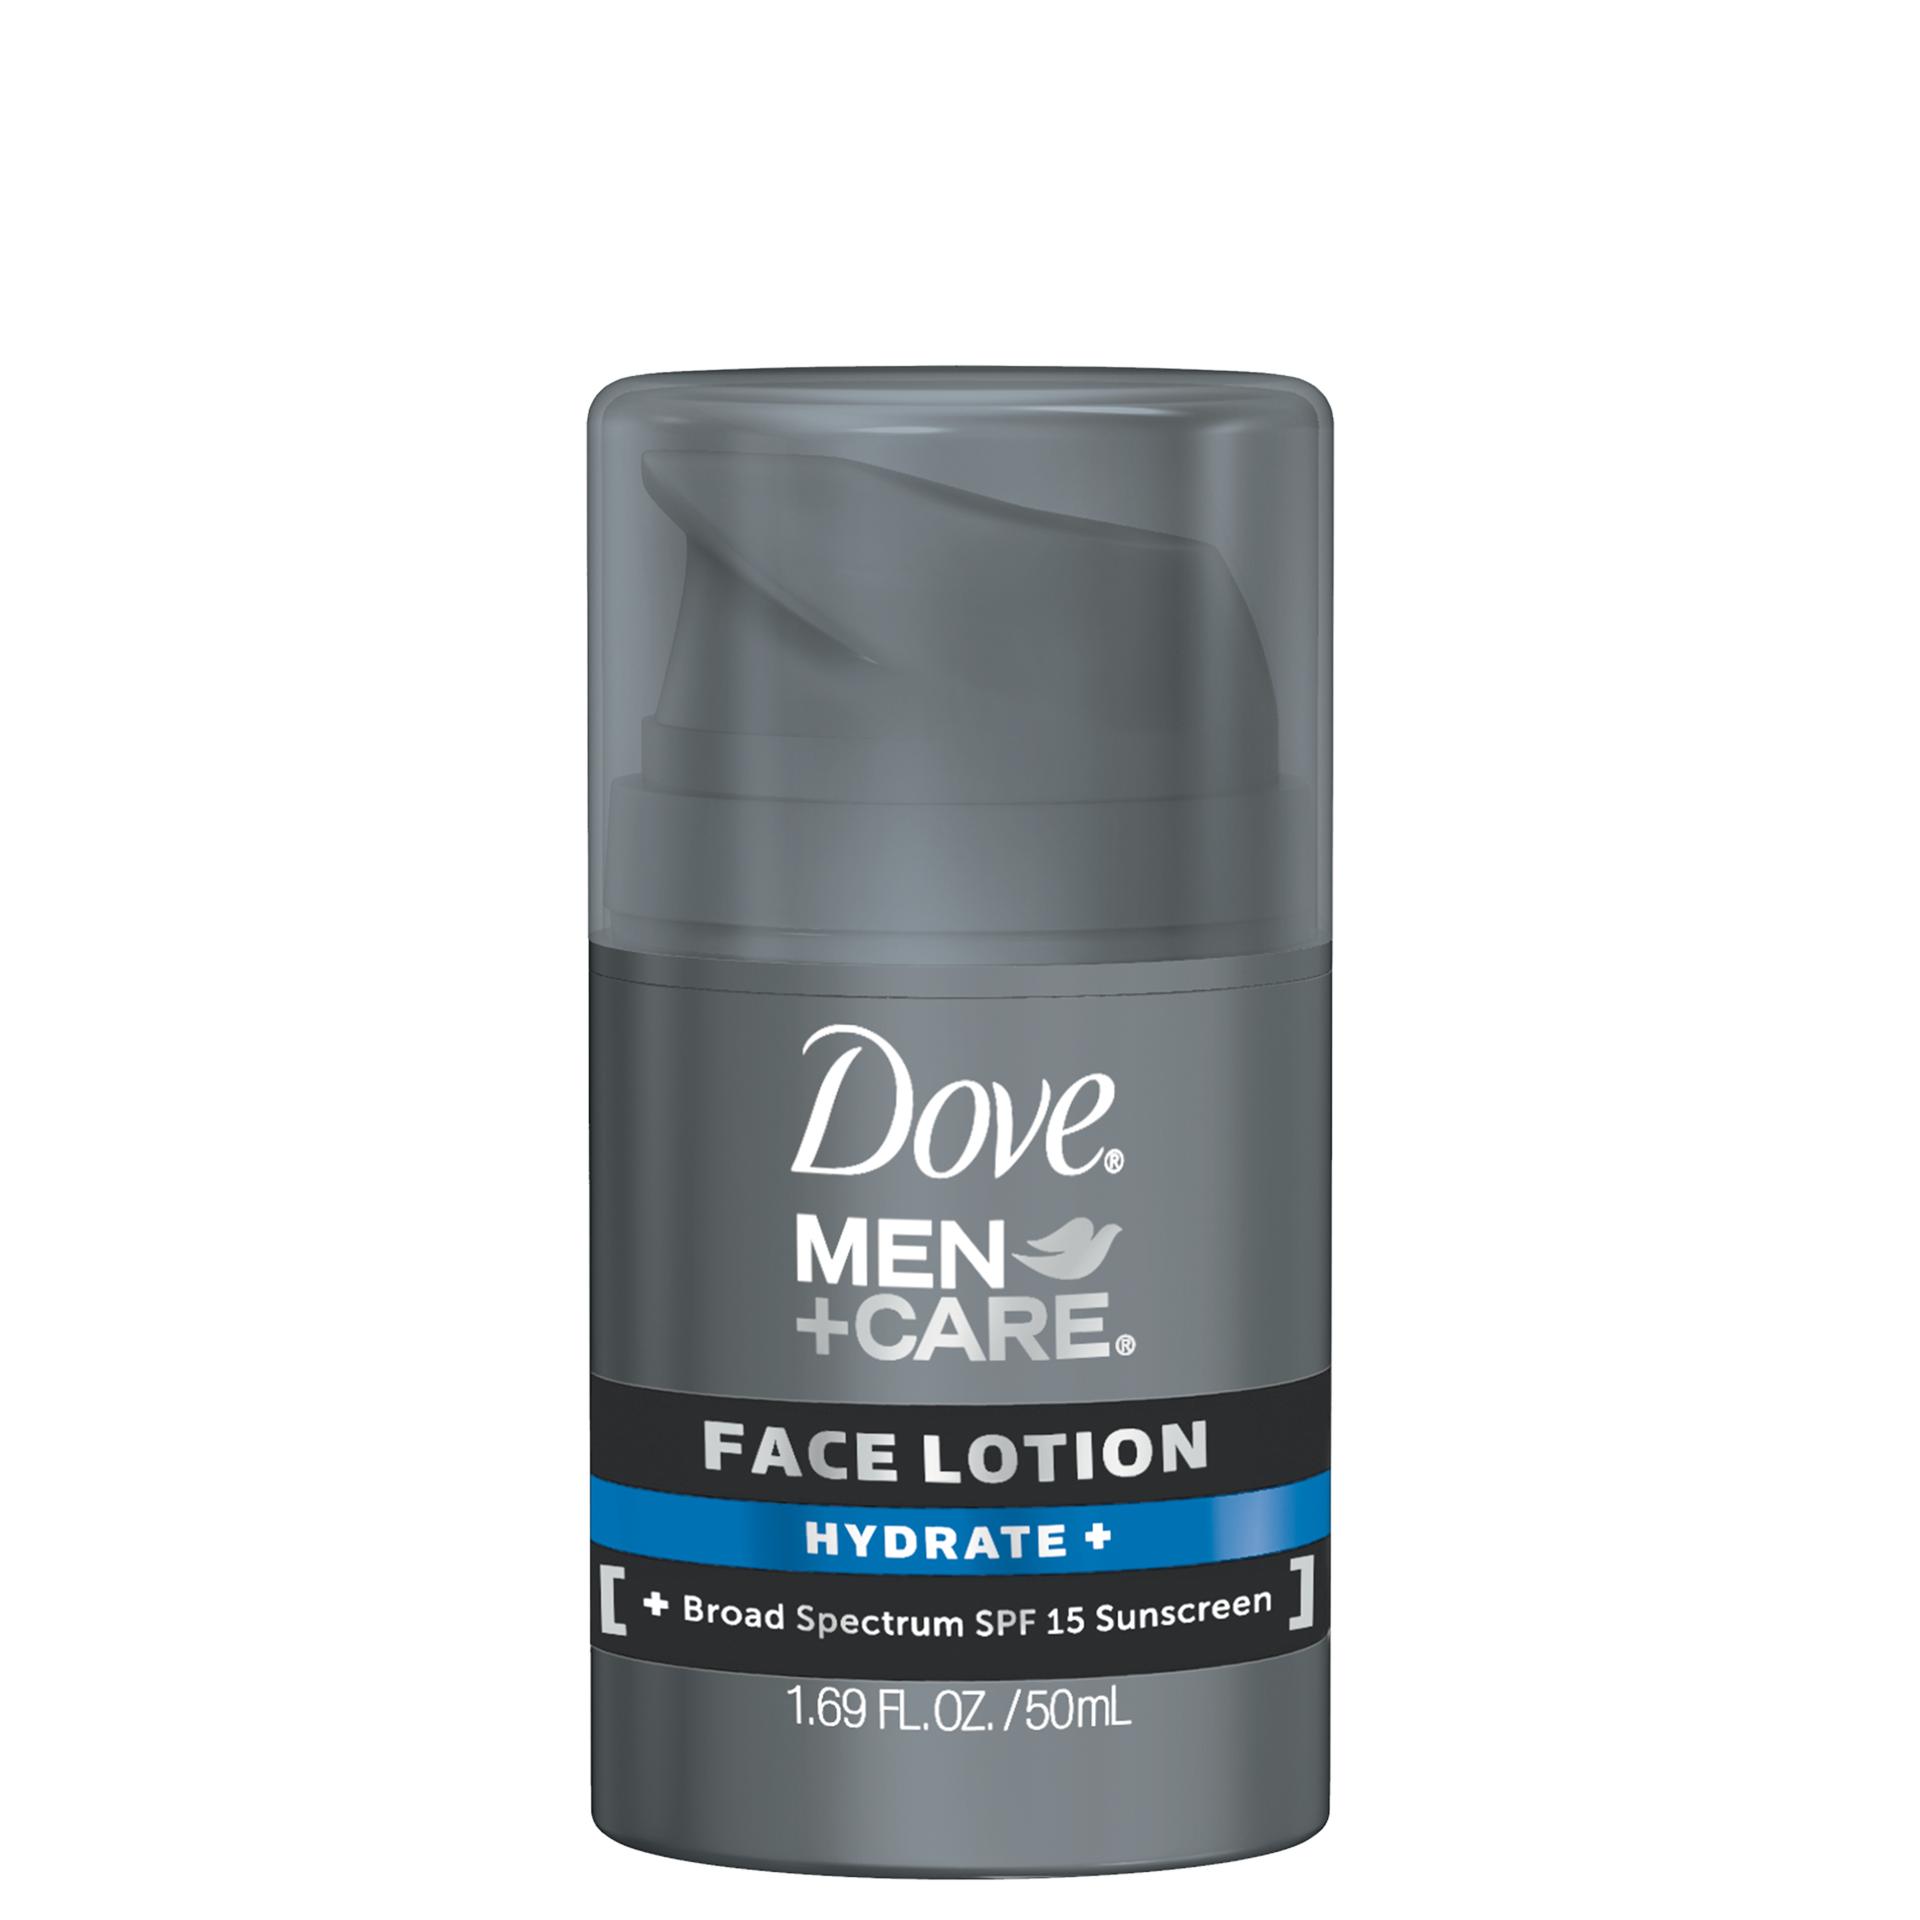 Dove Men+Care Hydrate+ Face Lotion 1.69 oz